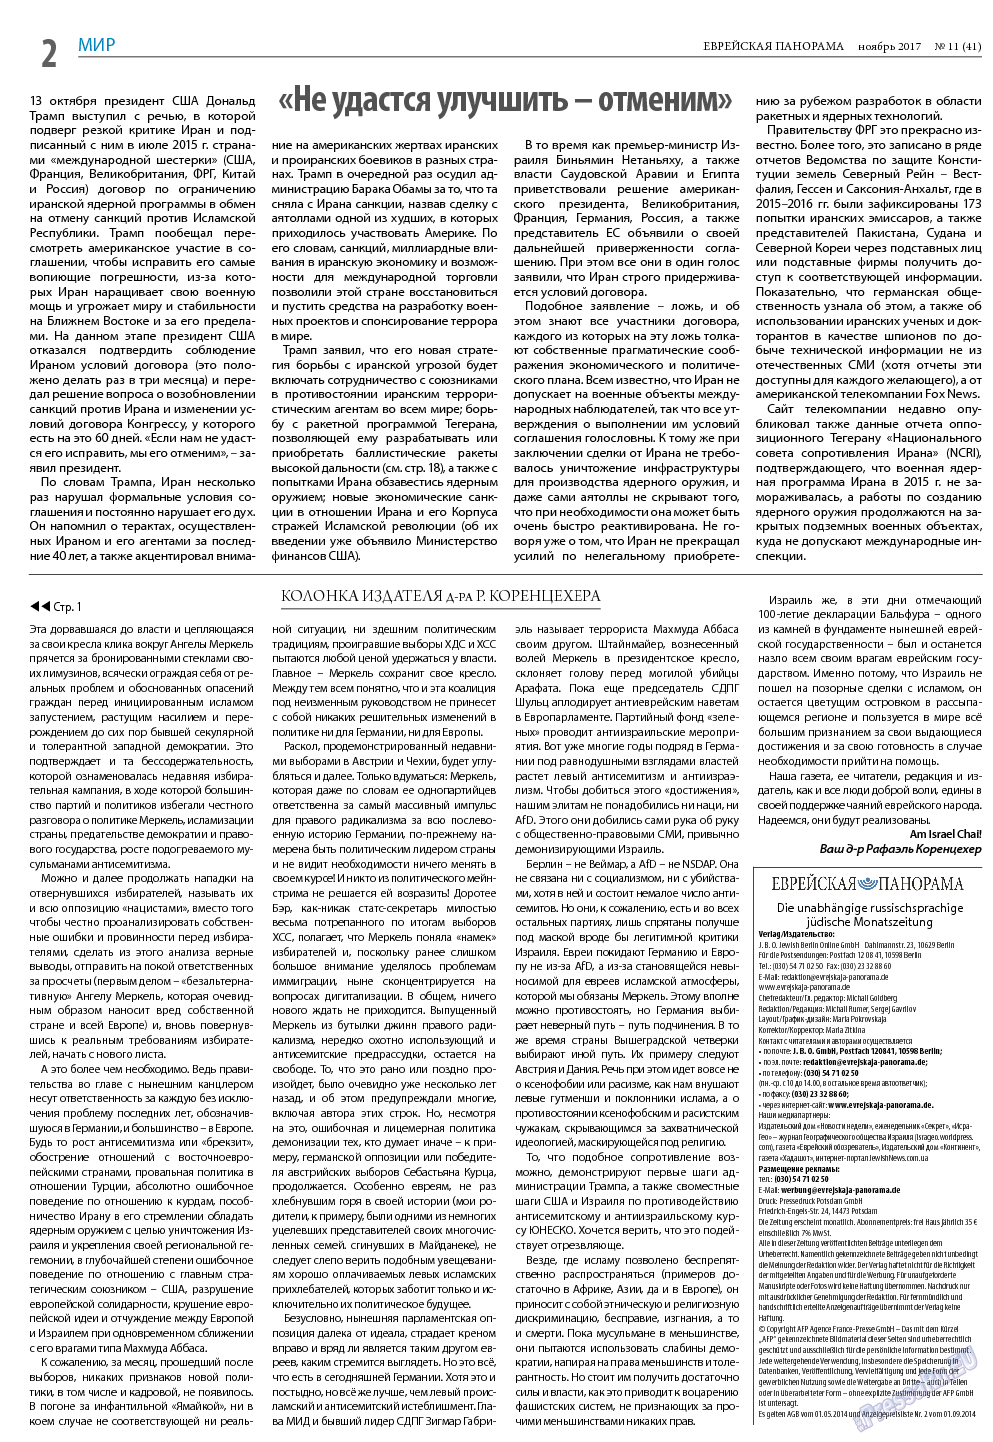 Еврейская панорама, газета. 2017 №11 стр.2